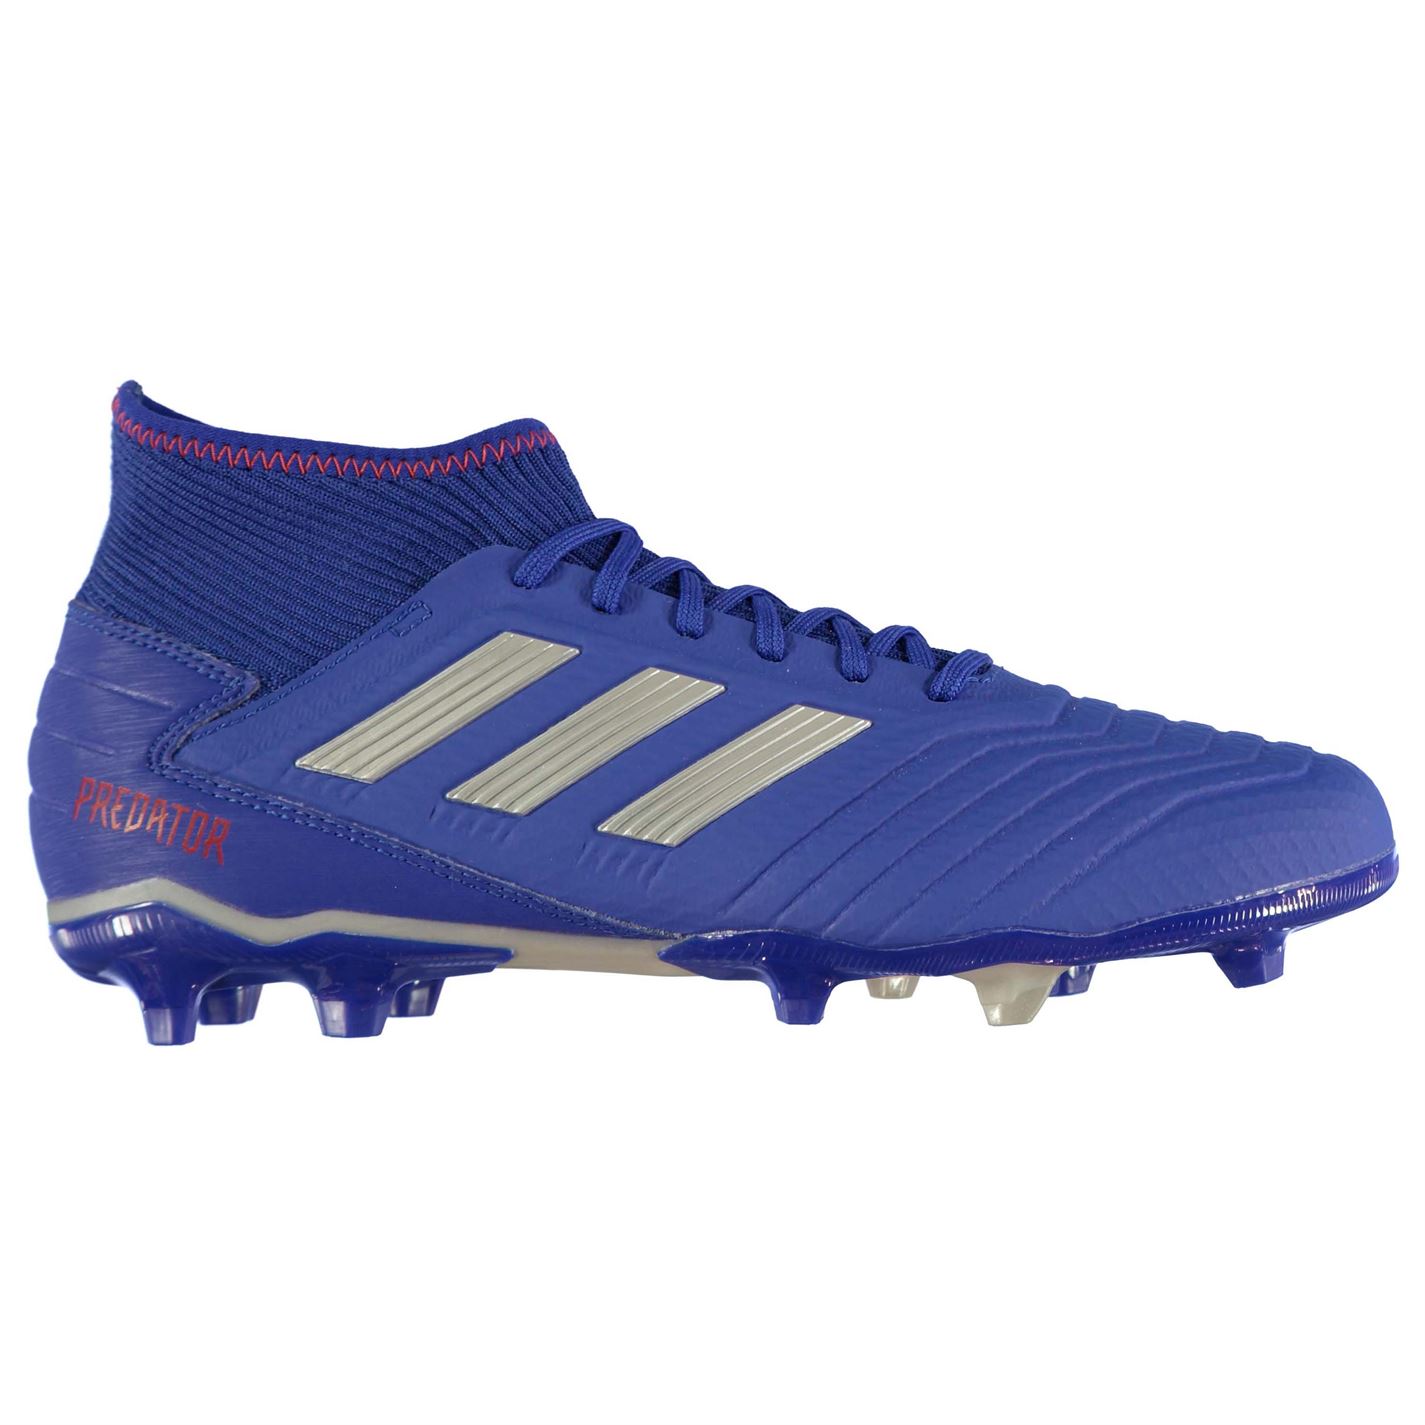 Adidas Predator 19.3 FG Mens Football Boots